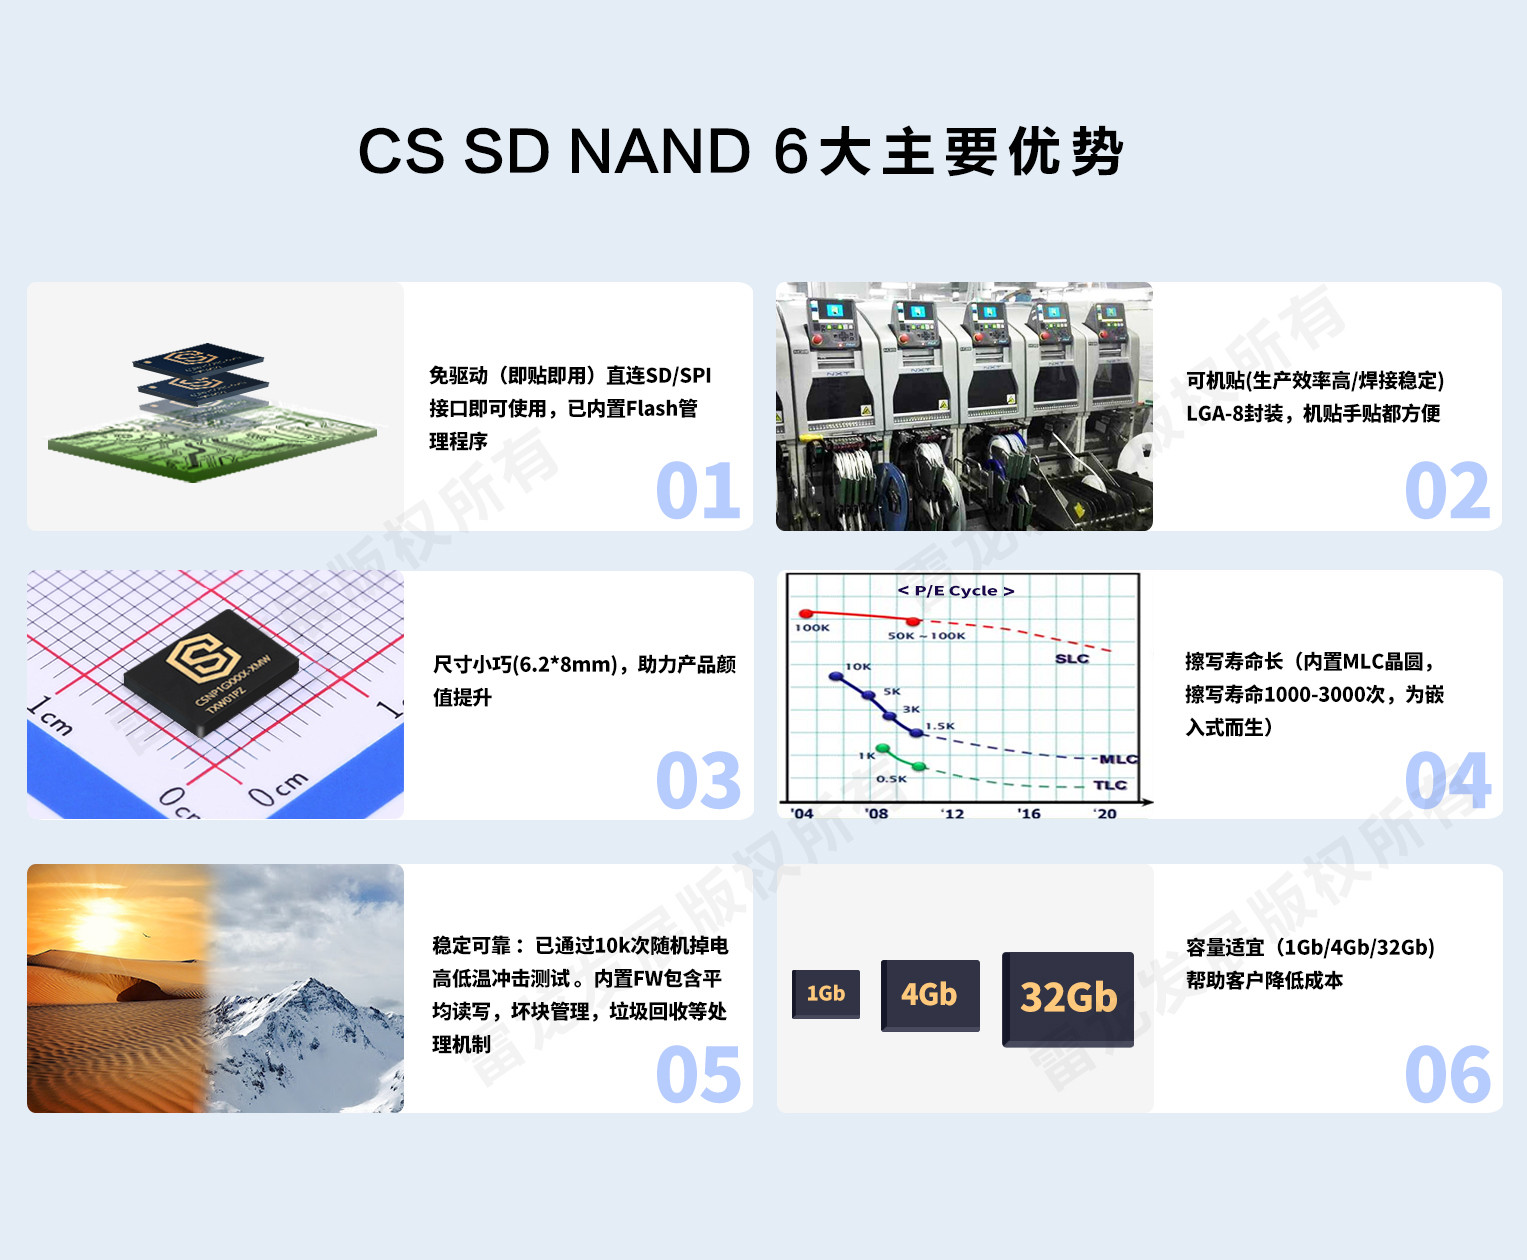 CS SD NAND的优势